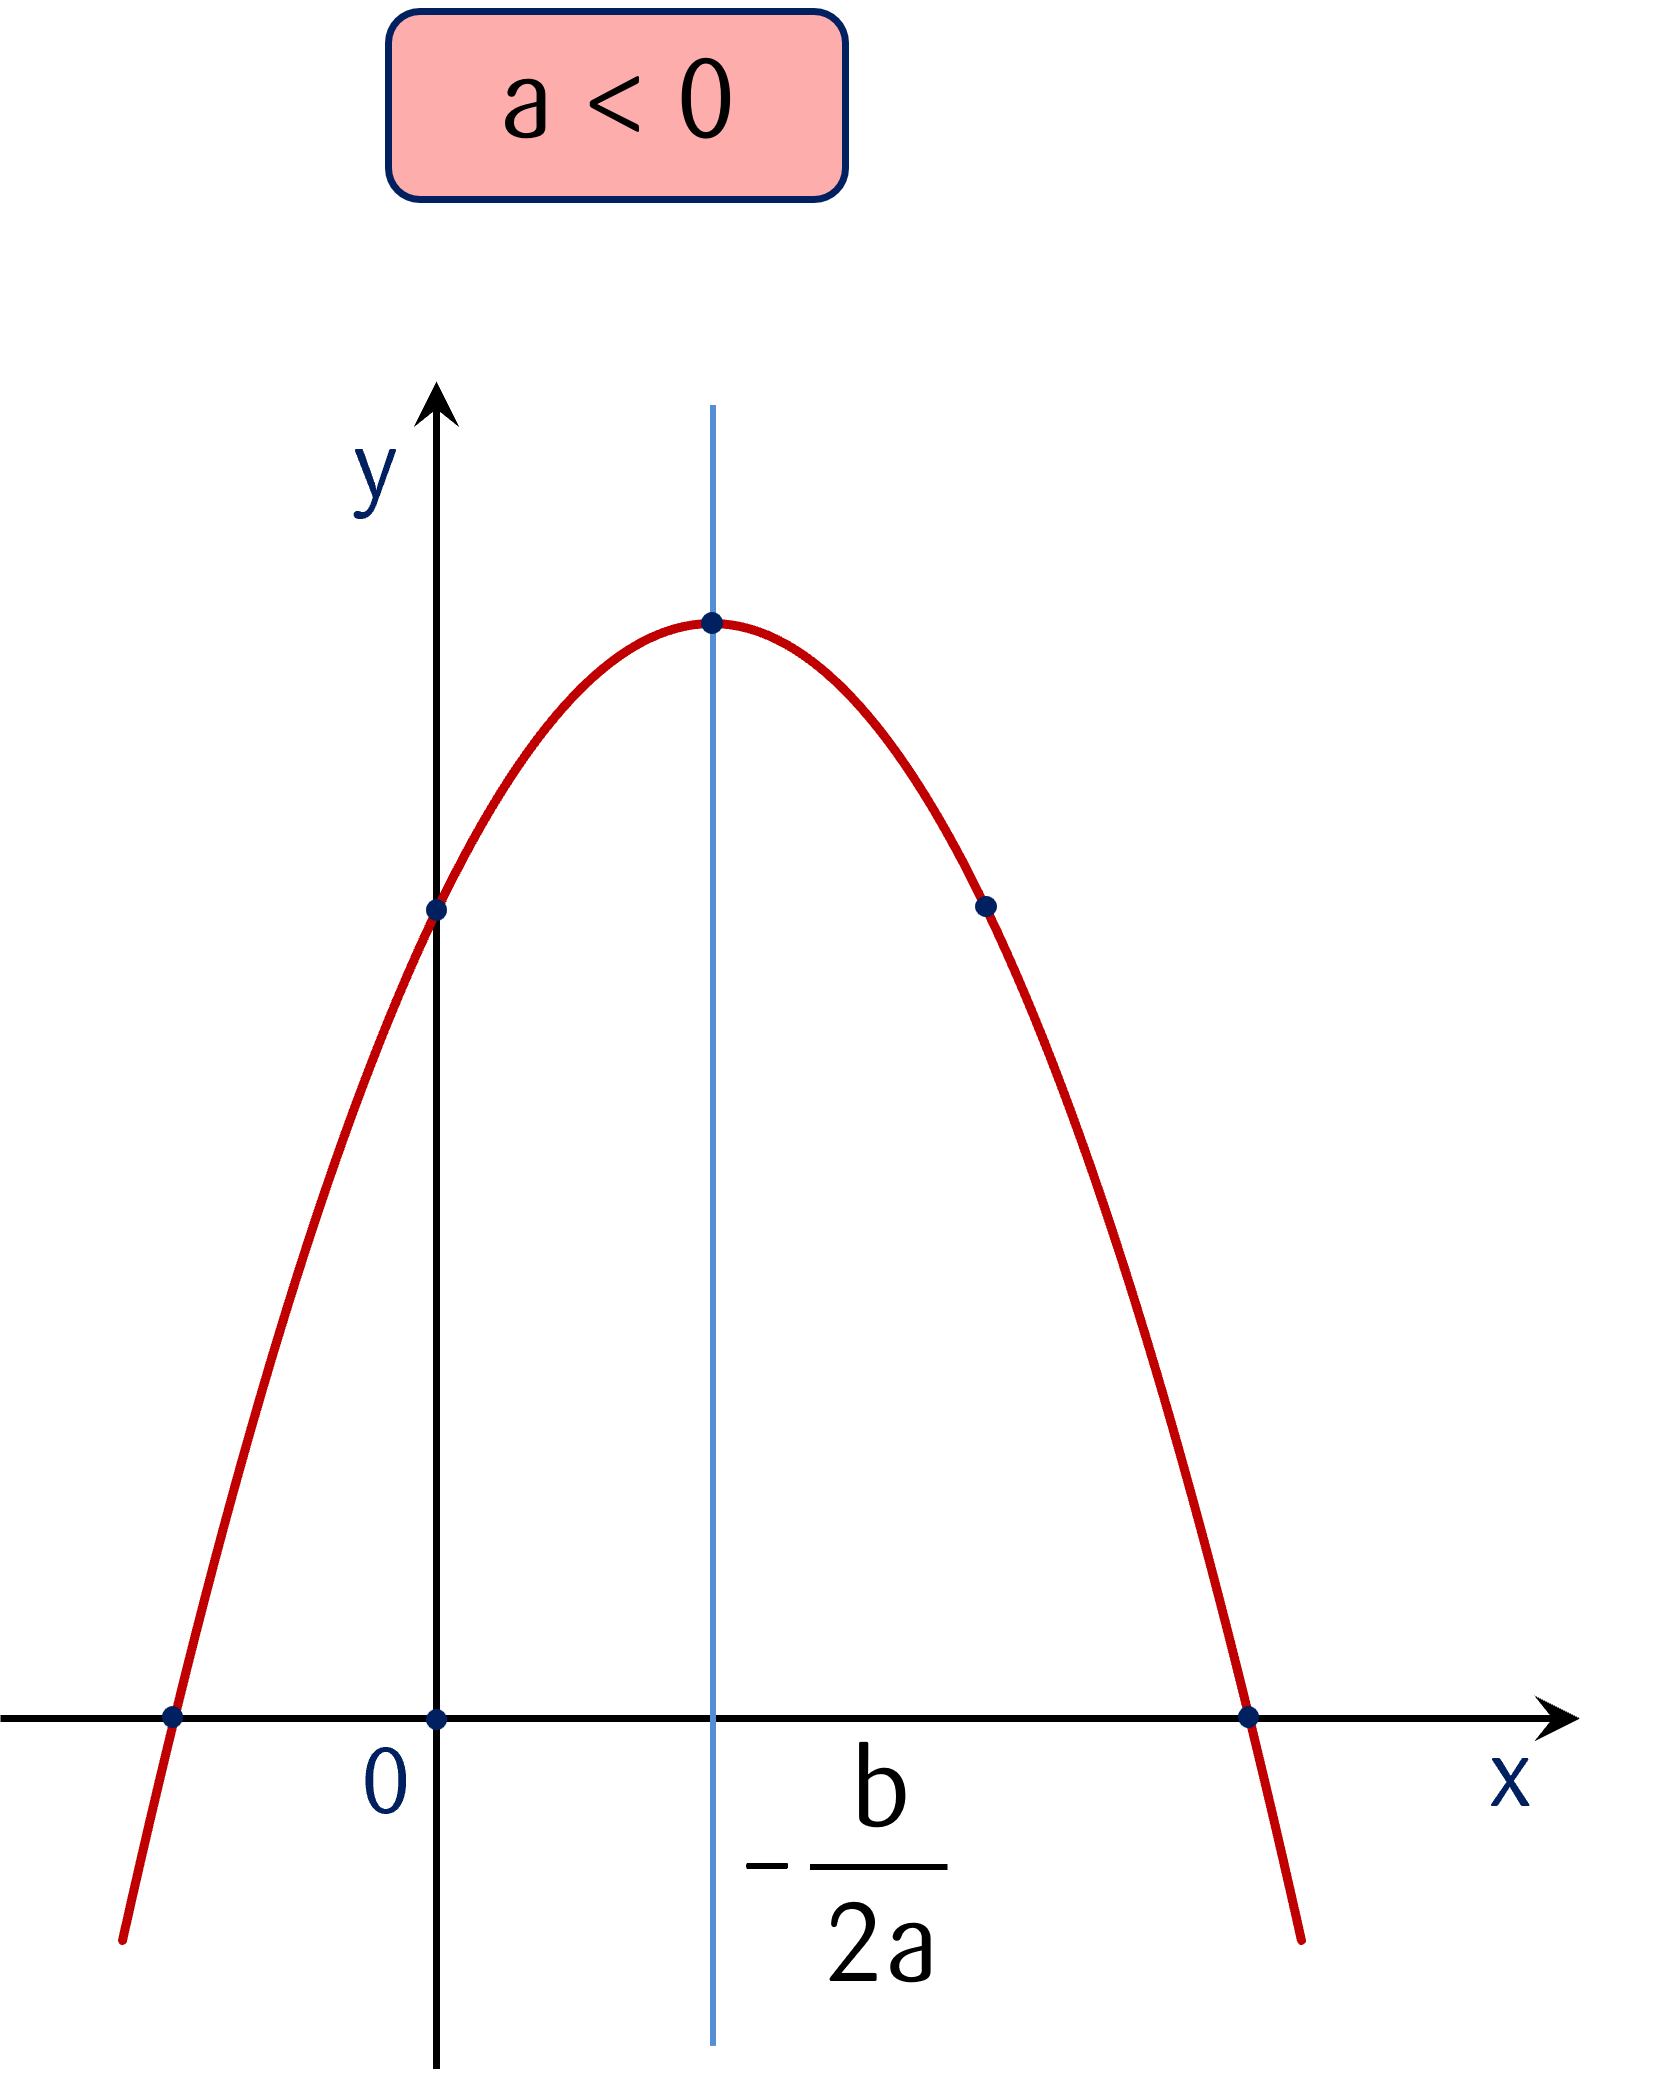 parabol y=ax^2+bx+c với a<0